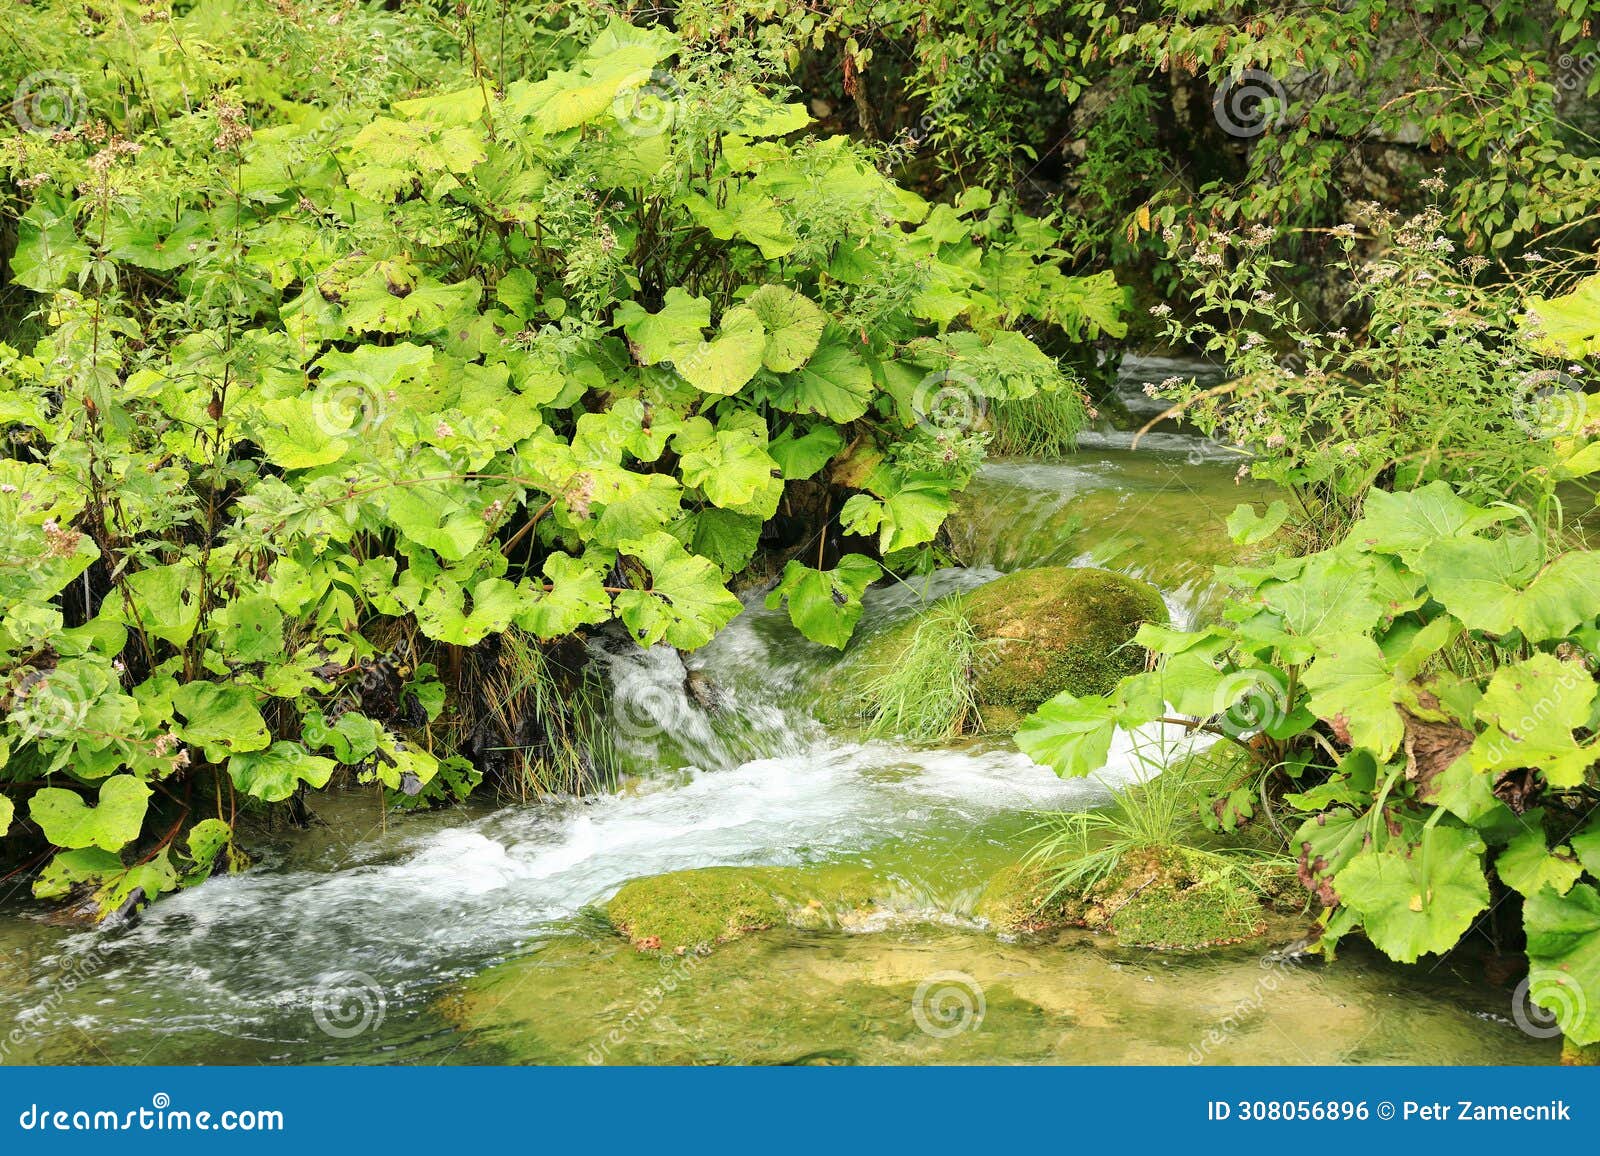 stream in wetlands on plitvicka jezera in croatia